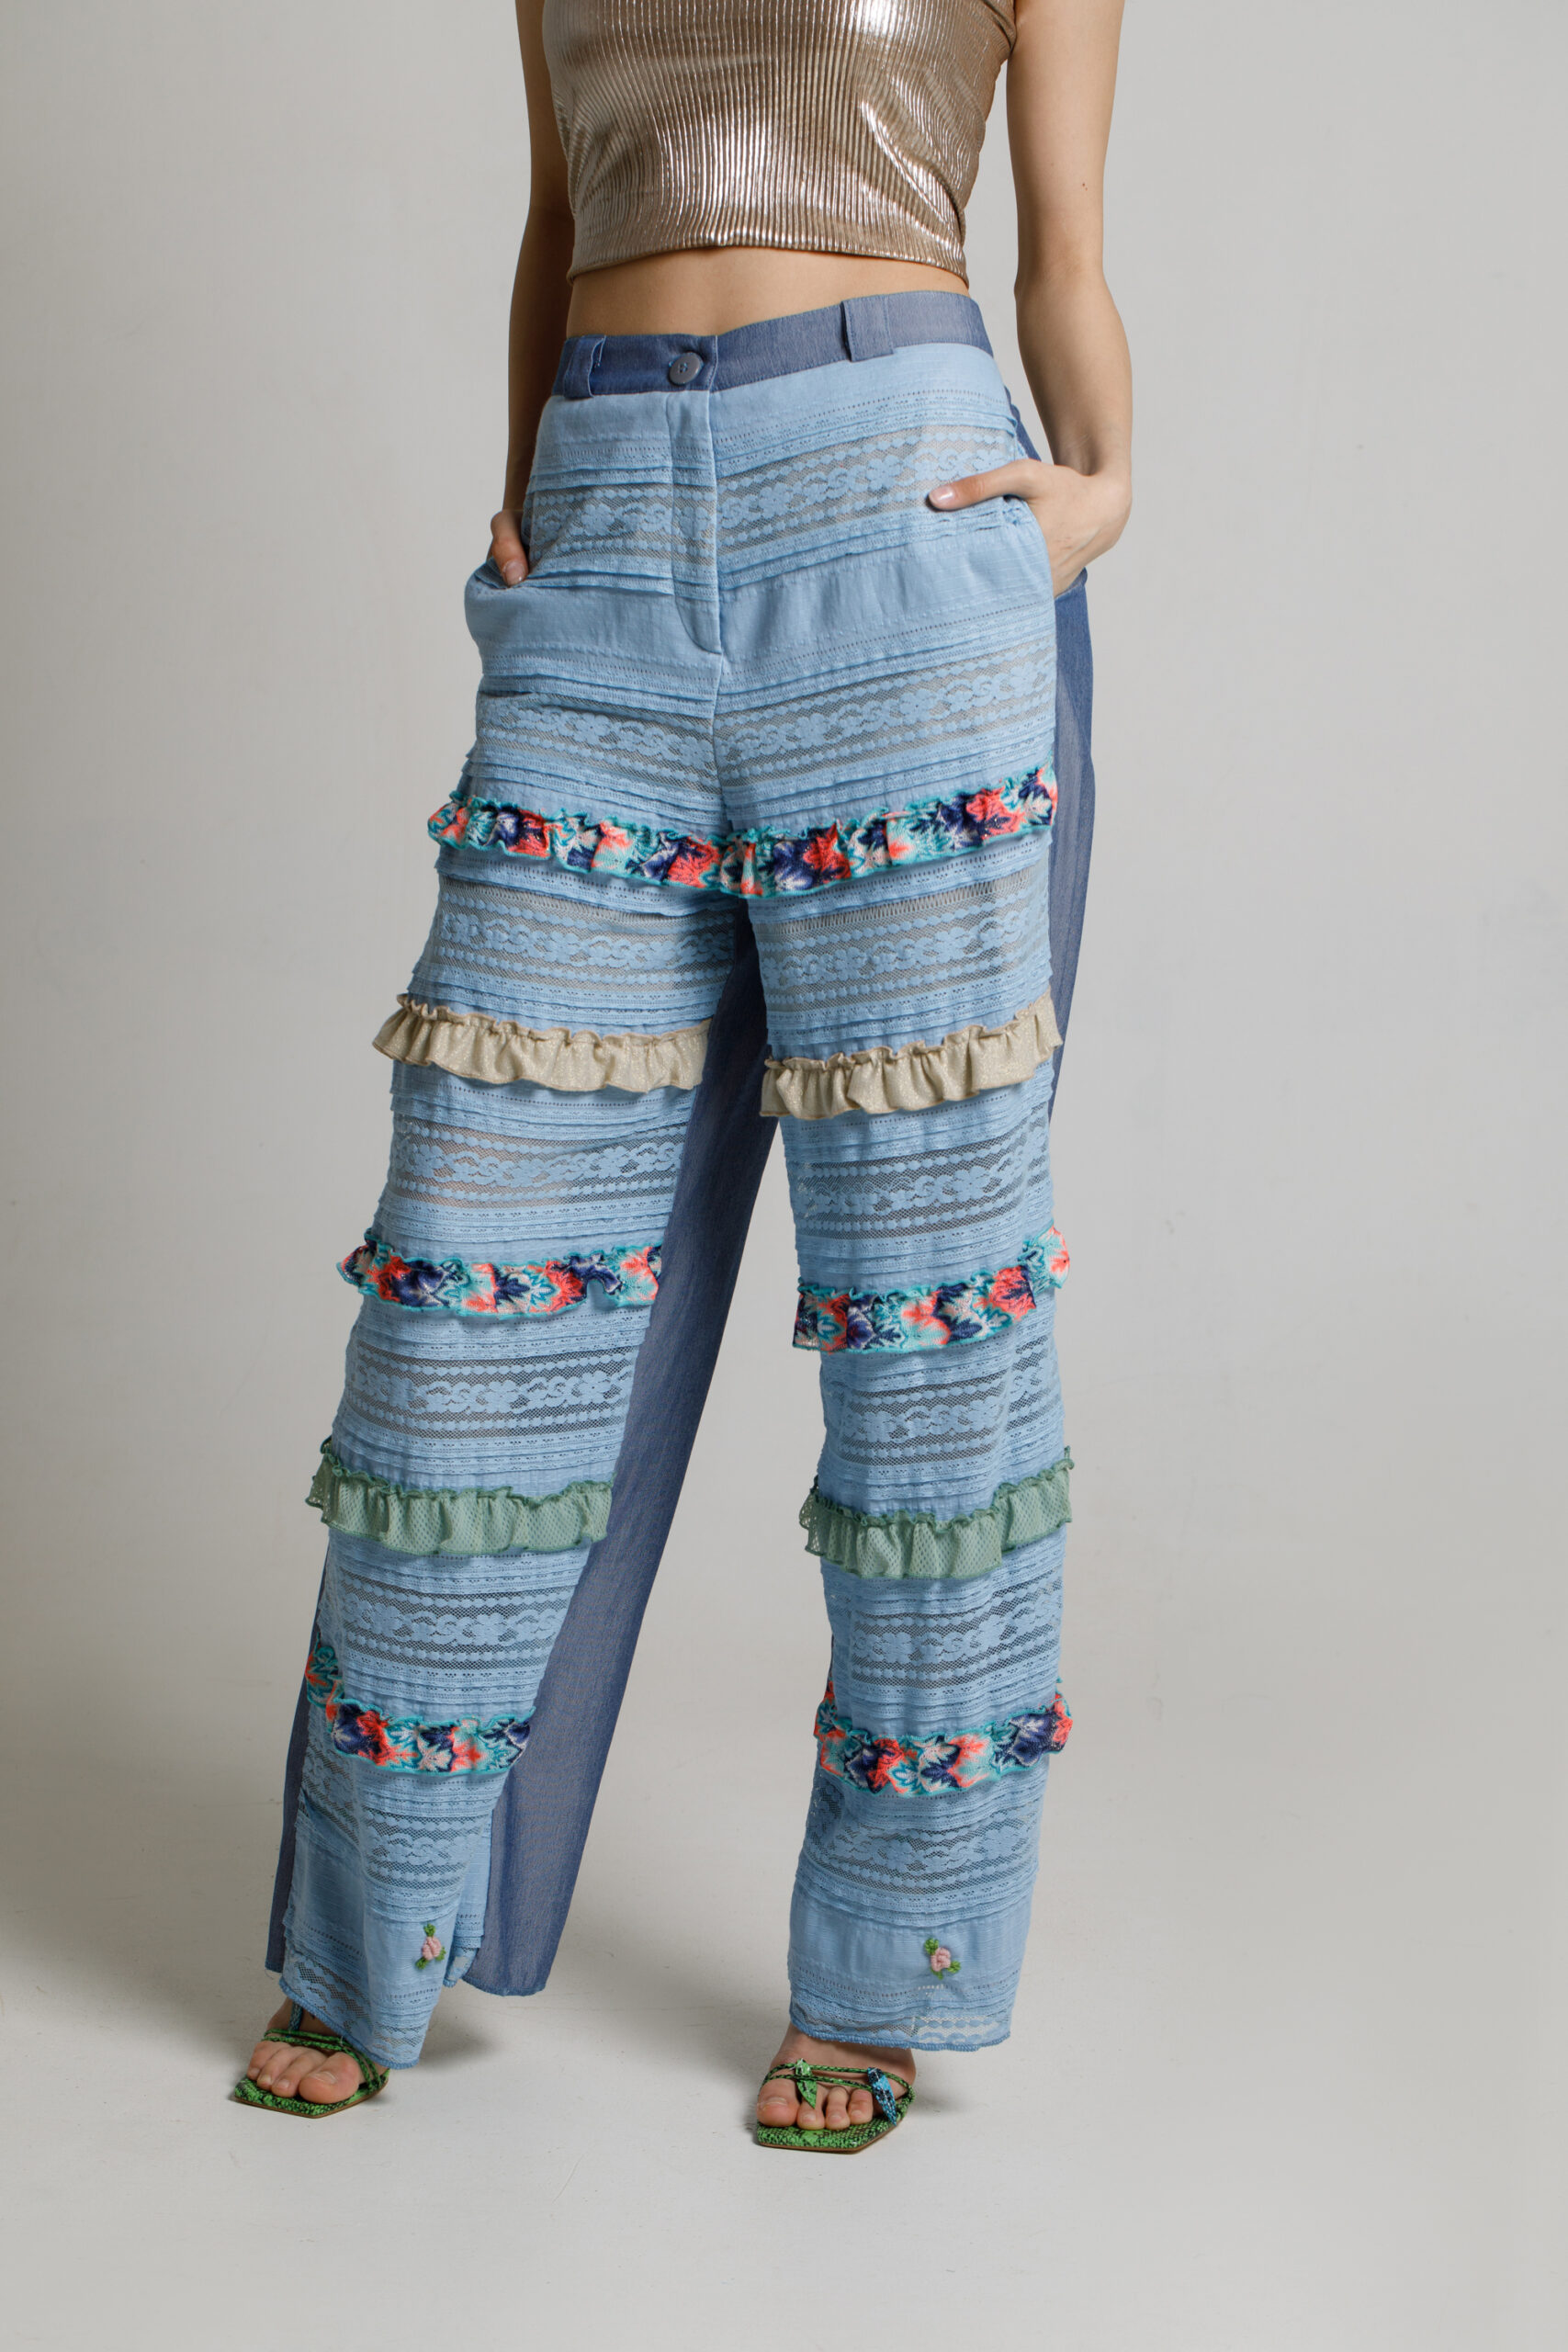 Pantalon OPAL din blug si dantela. Materiale naturale, design unicat, cu broderie si aplicatii handmade